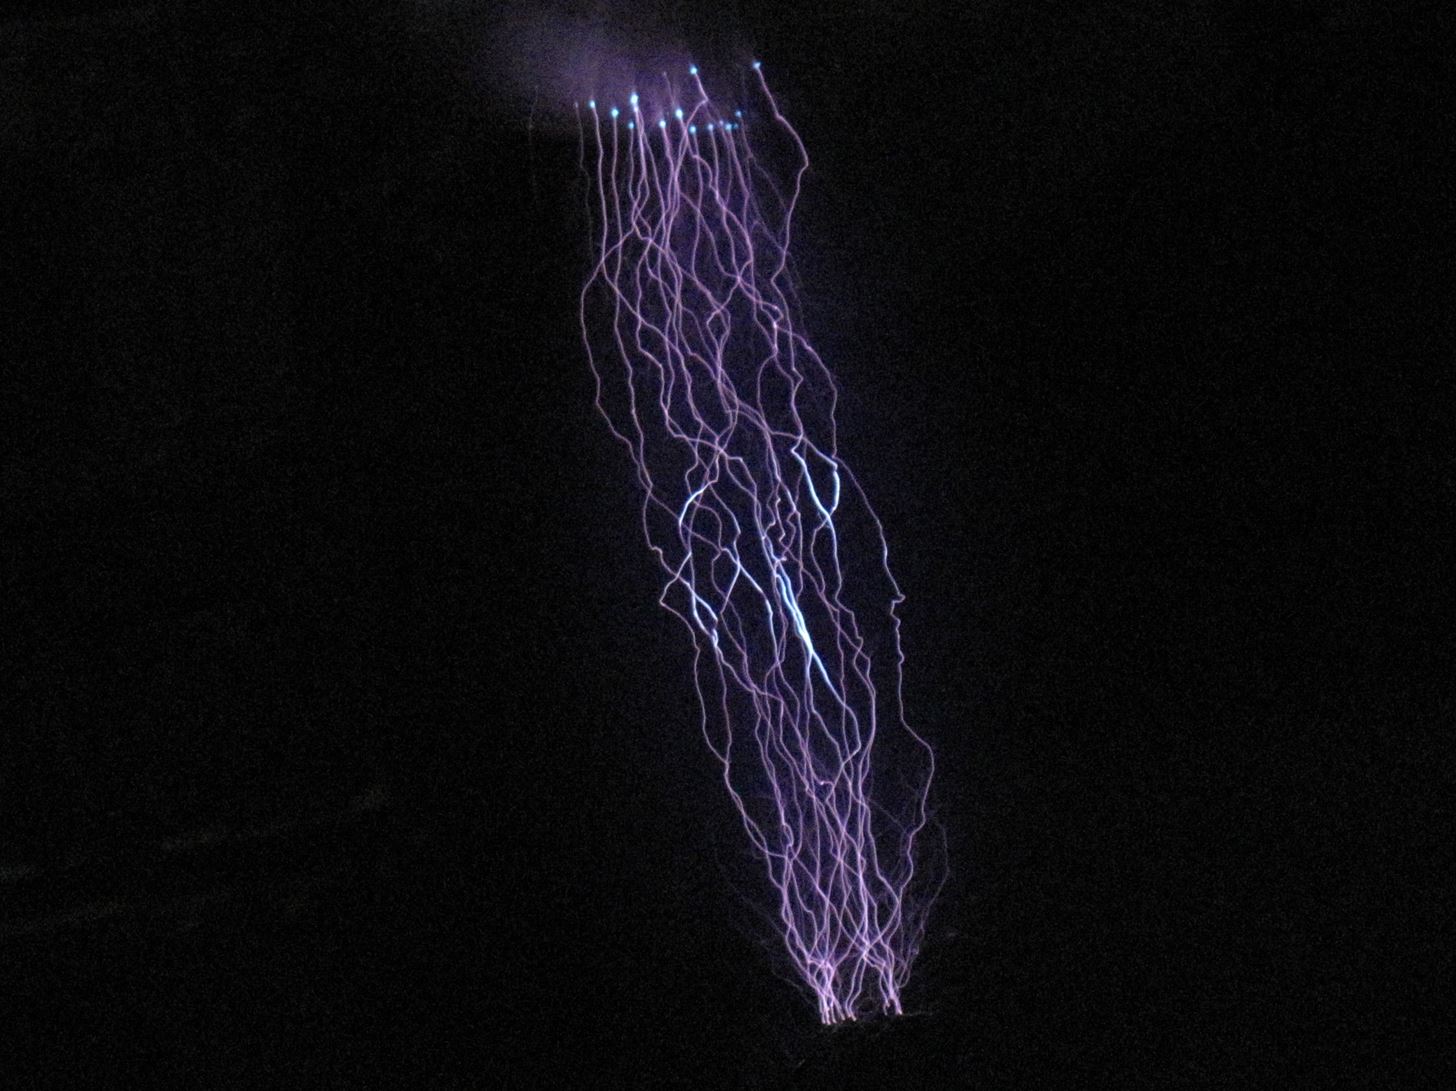 Portable DIY Tesla Coil Gun Shoots 20,000 Volts of Lightning!